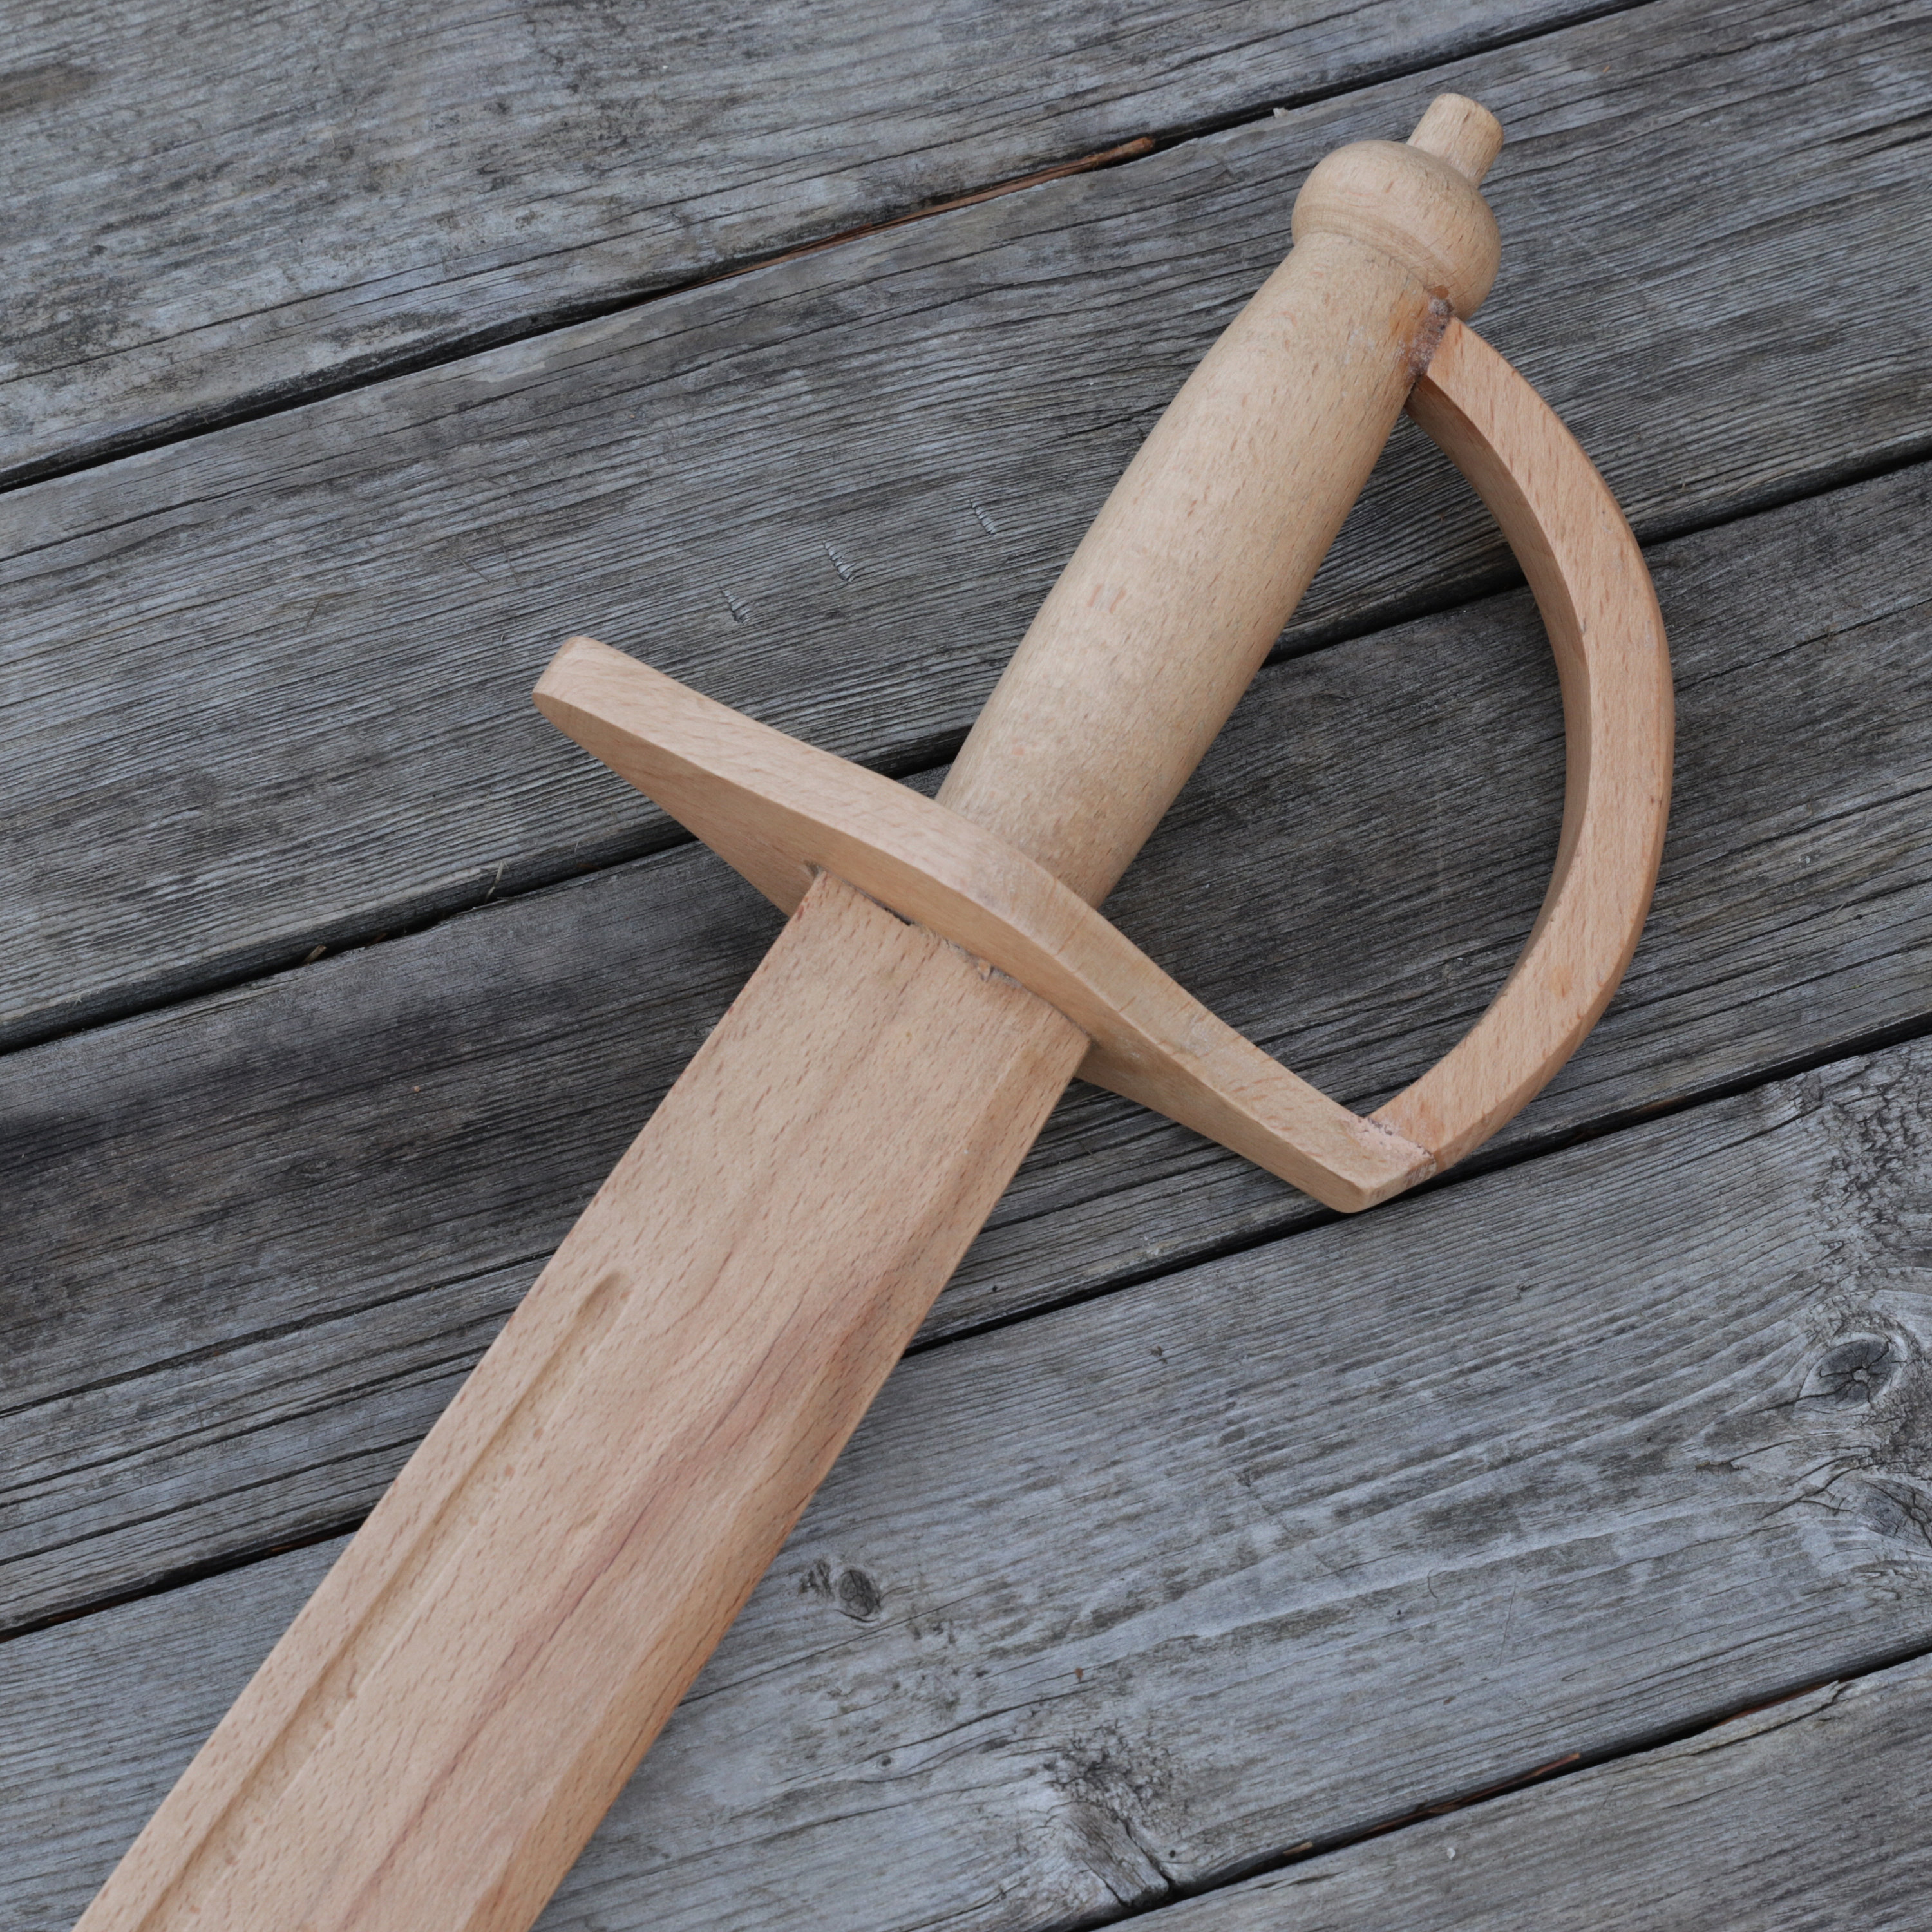 Spanish Main Buccaneer Steamed Beech Wood Pirate Sword